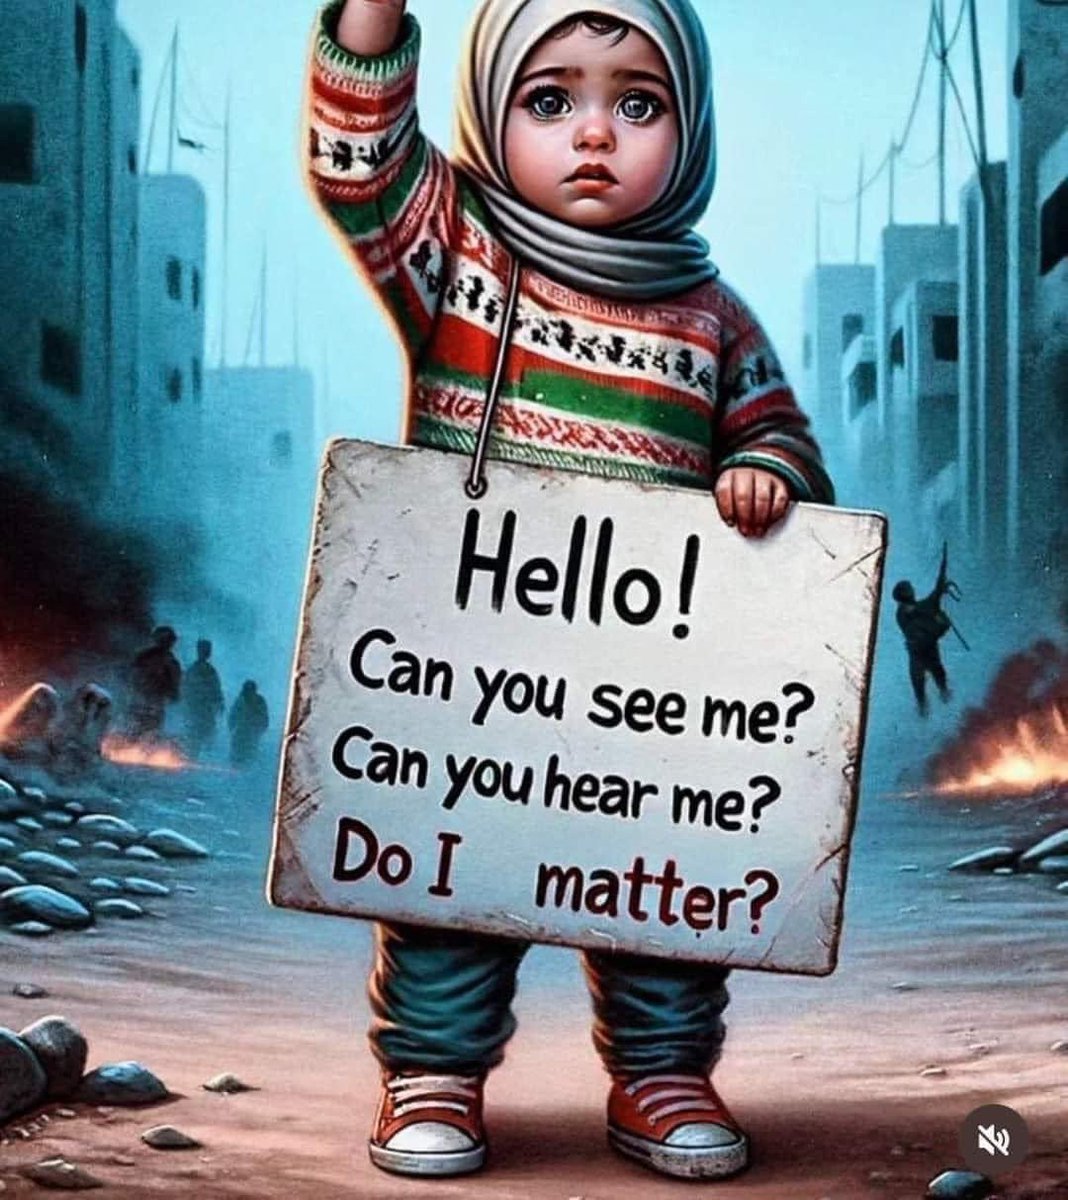 #FreePalestineFromlsraelNOW 
#StopTheEthnicGenocide
#ChildrenLivesMatter